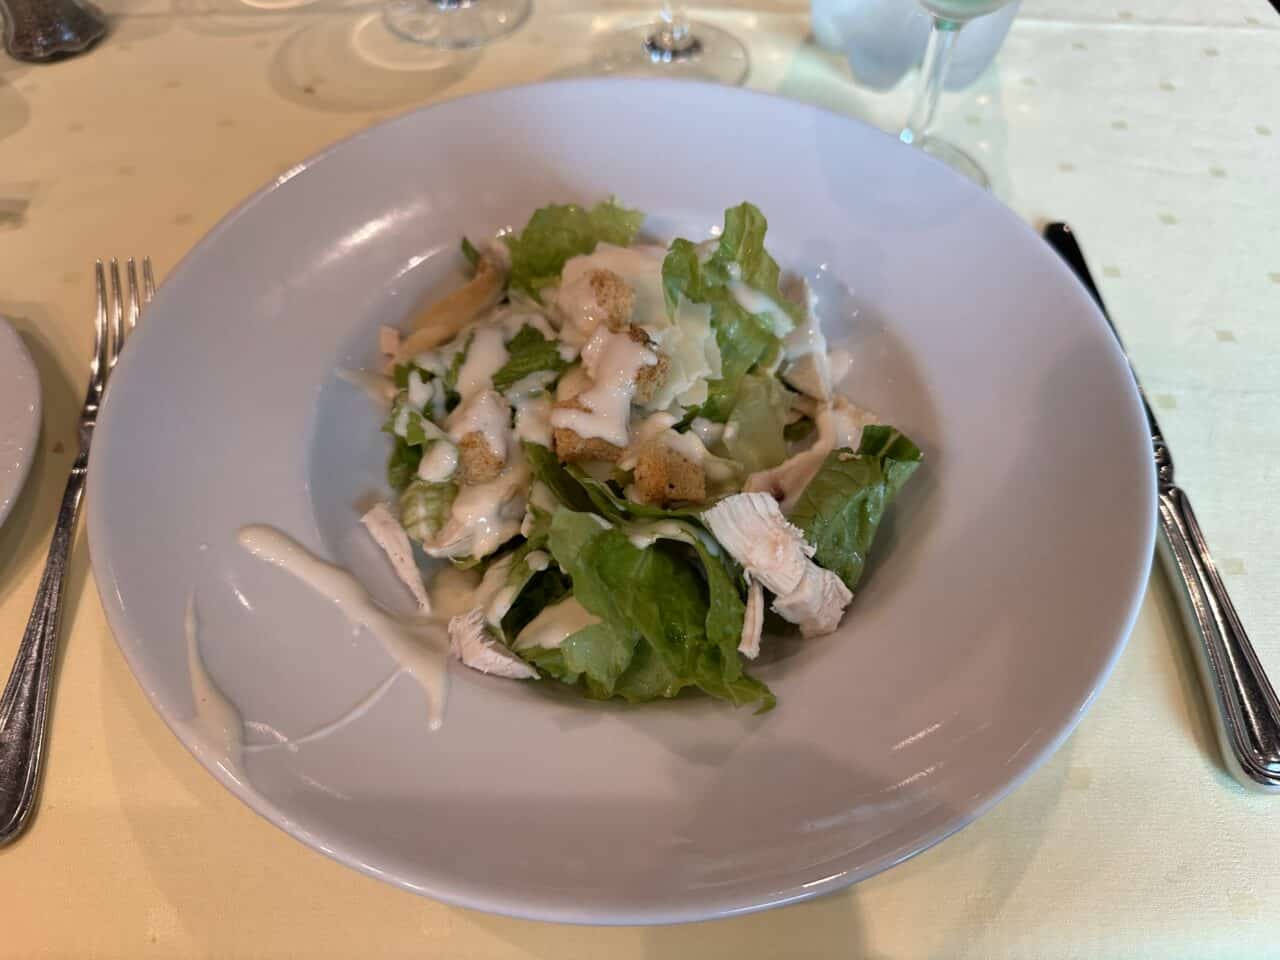 MSC Preziosa - Caesar Salad